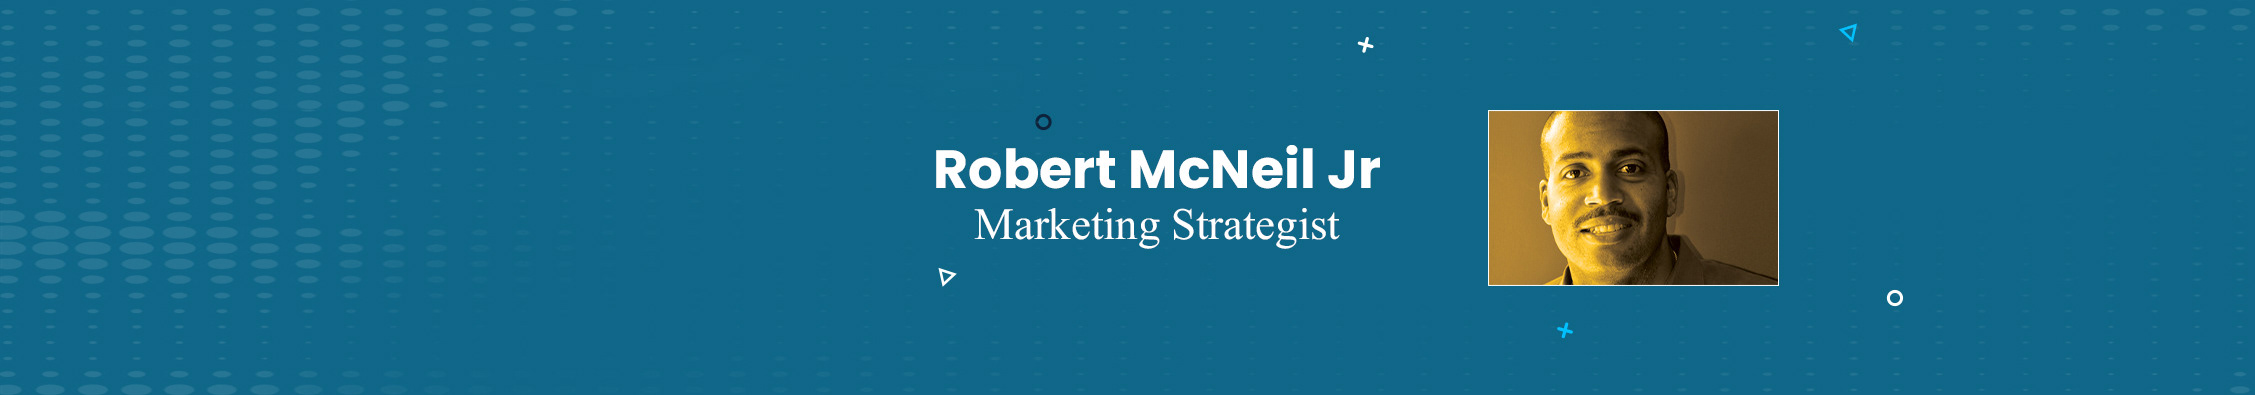 Robert McNeil Jr's profile banner